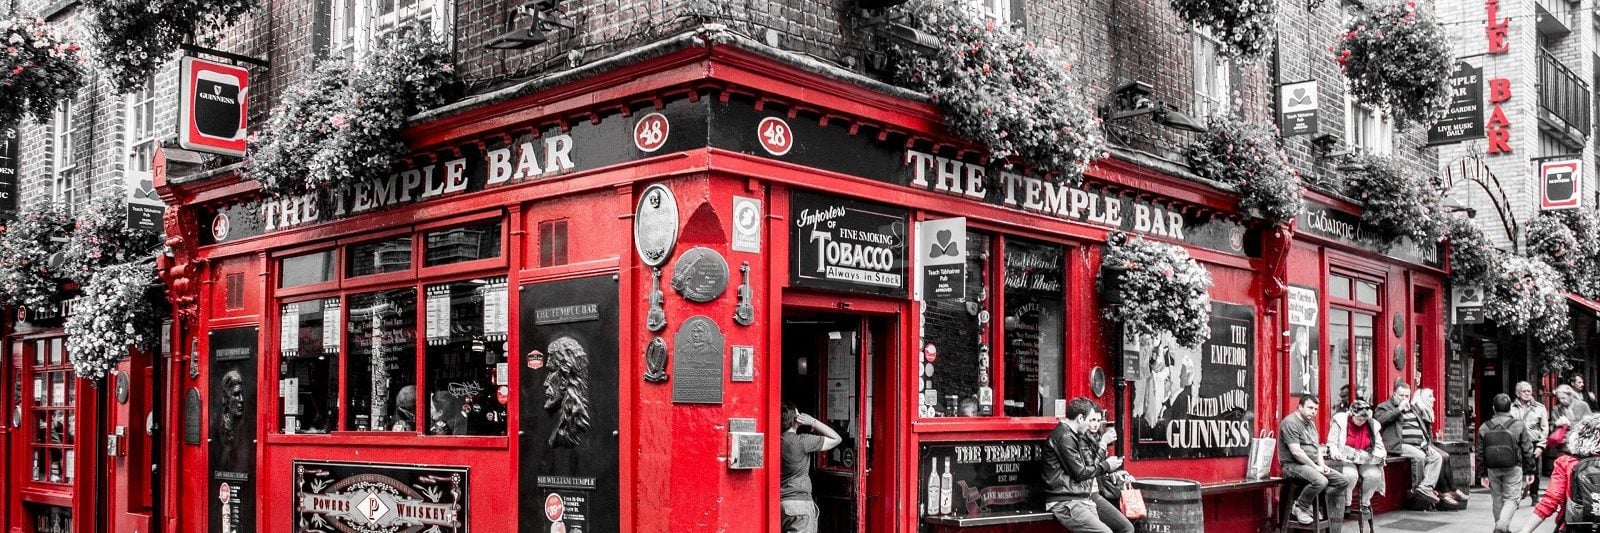 The Temple Bar in Dubin, Ireland